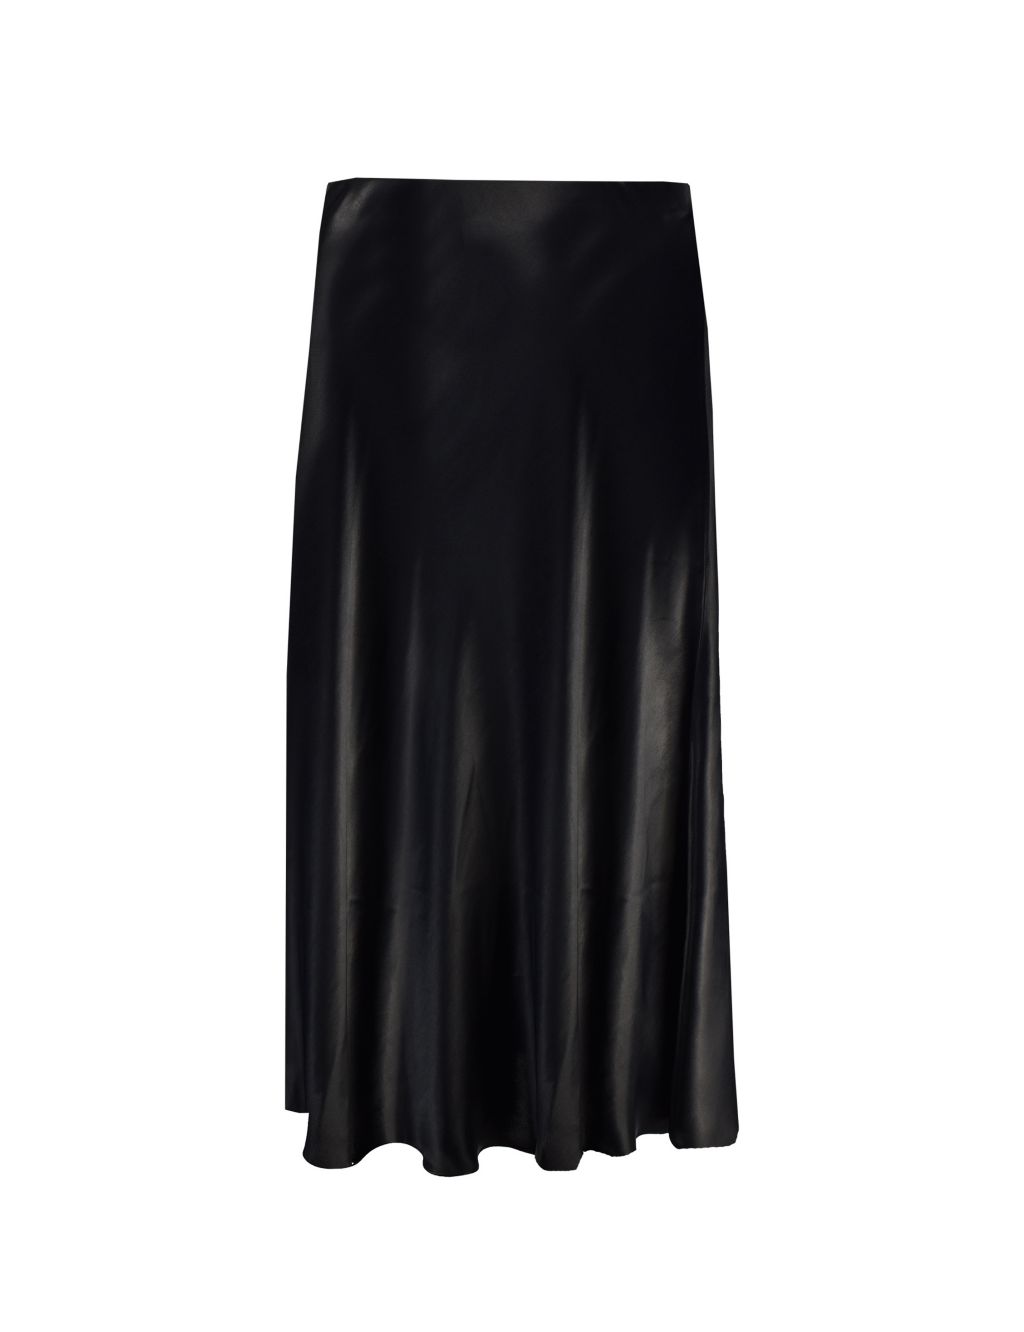 Satin Midi Slip Skirt image 2